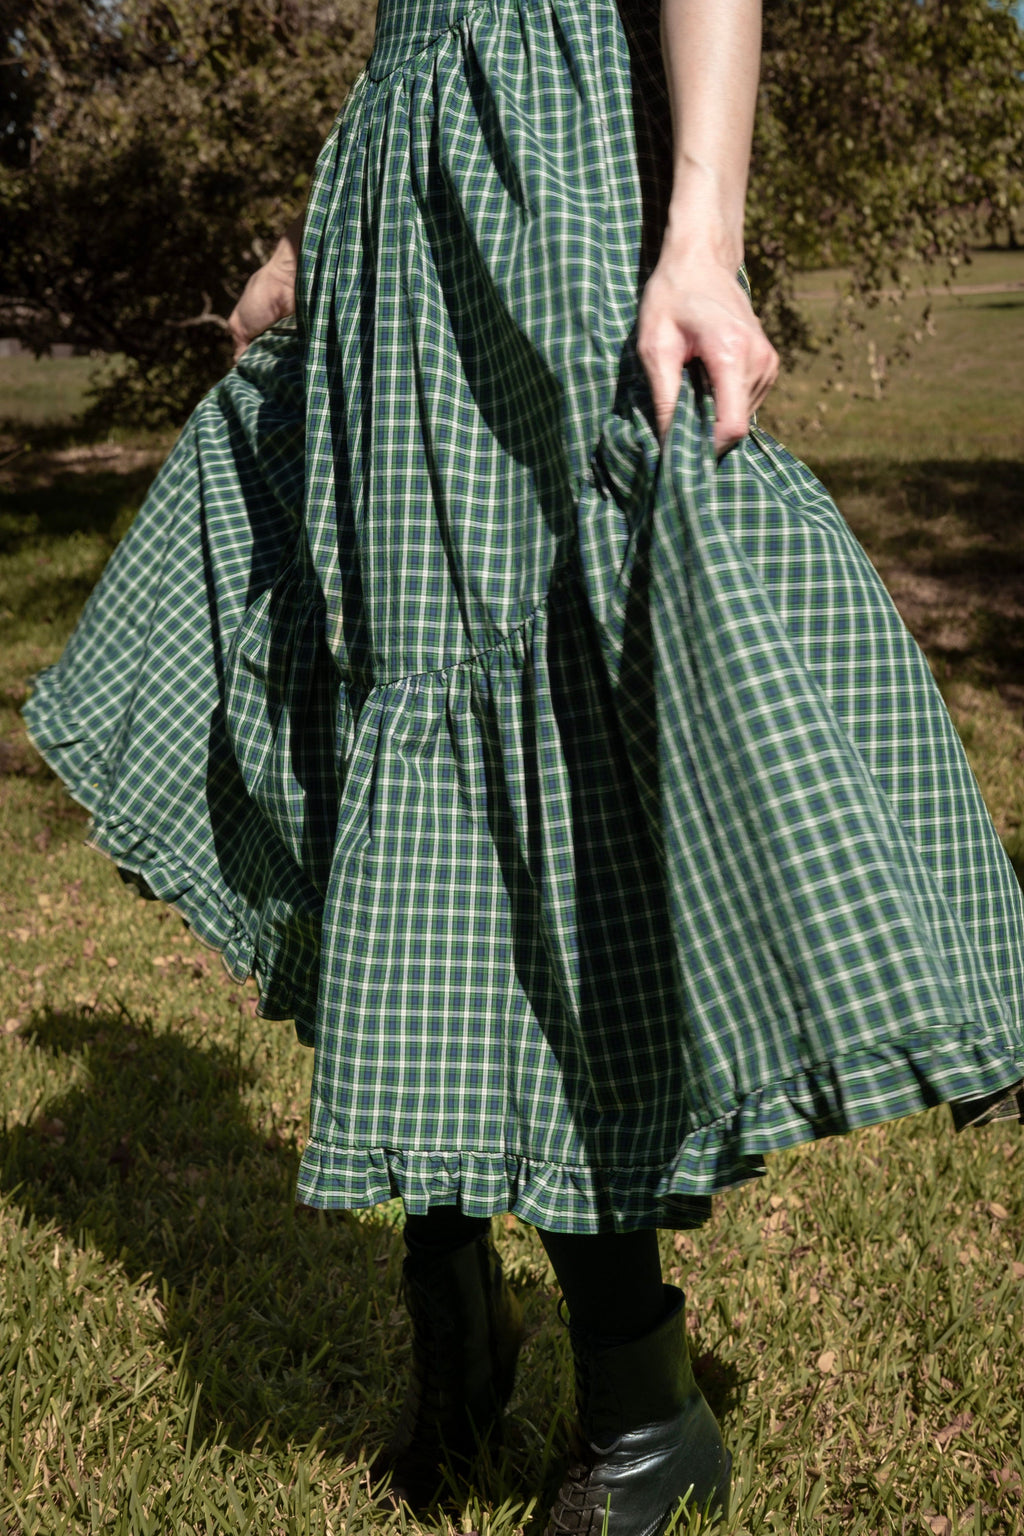 Mirabelle Dress in Haworth Plaid